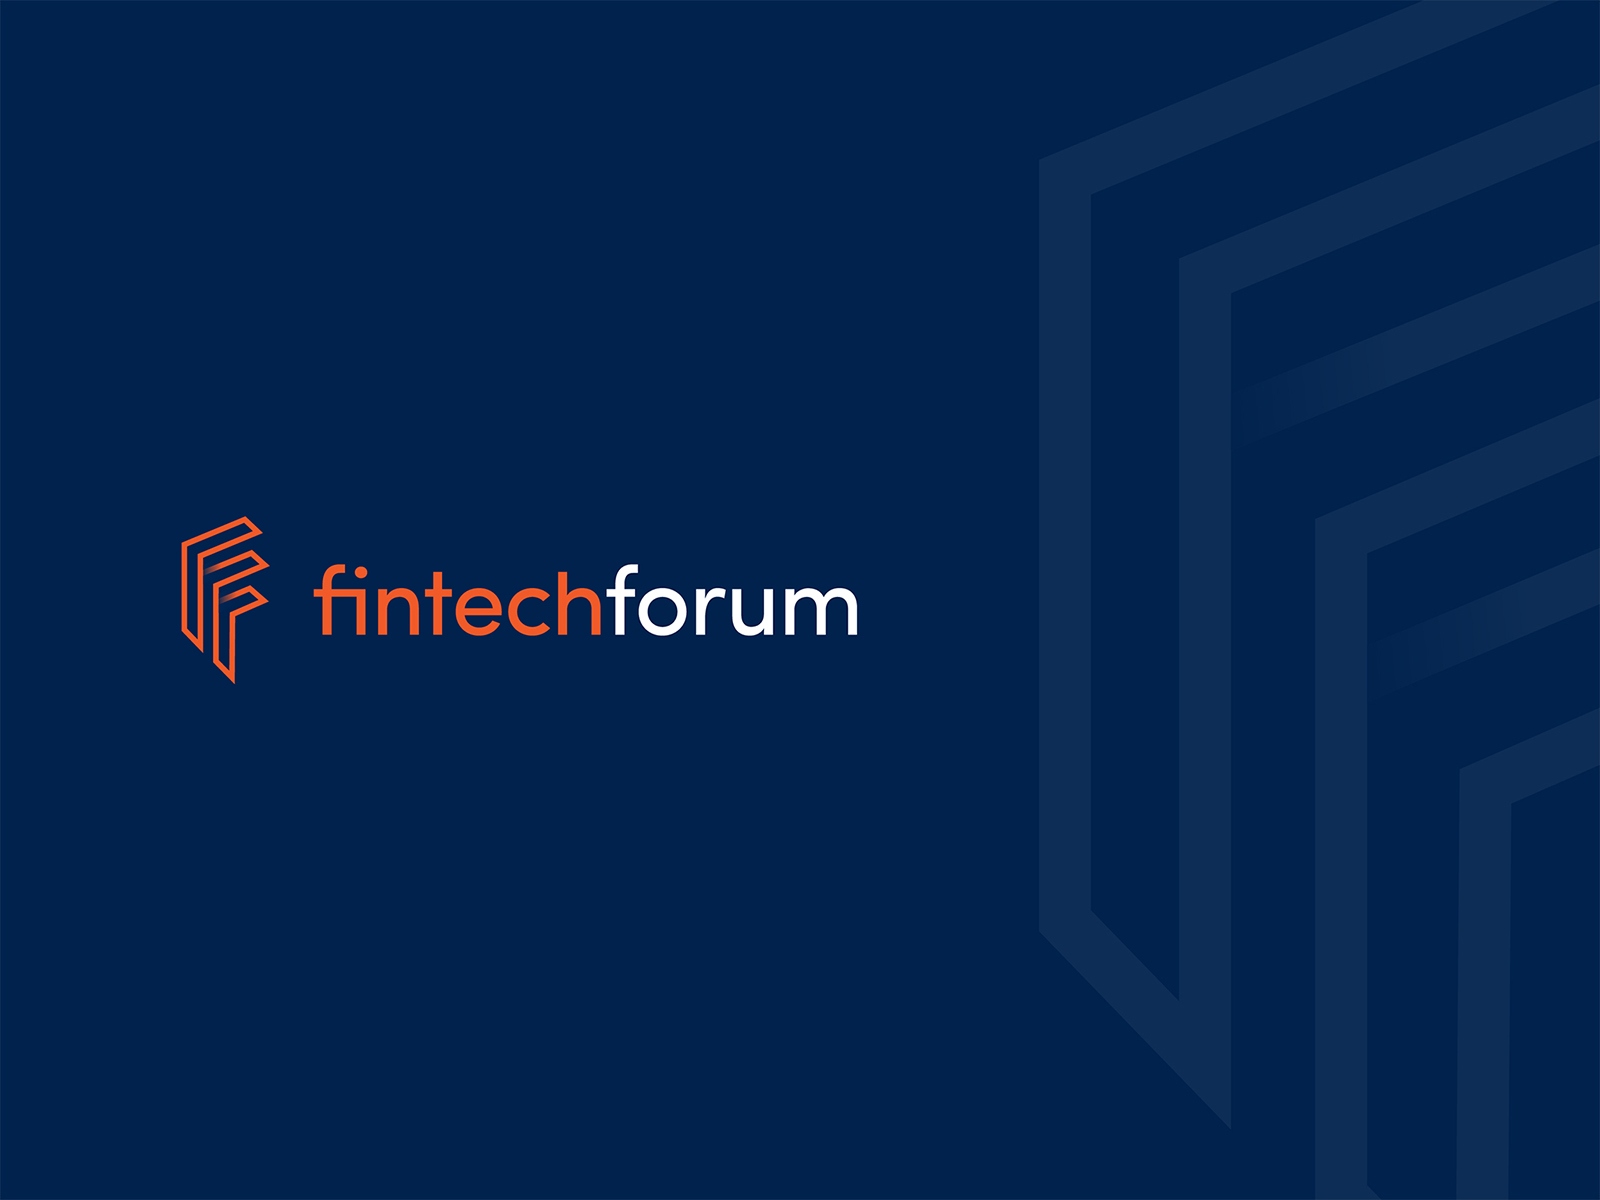 Fintech Forum Philippines - Selected logo